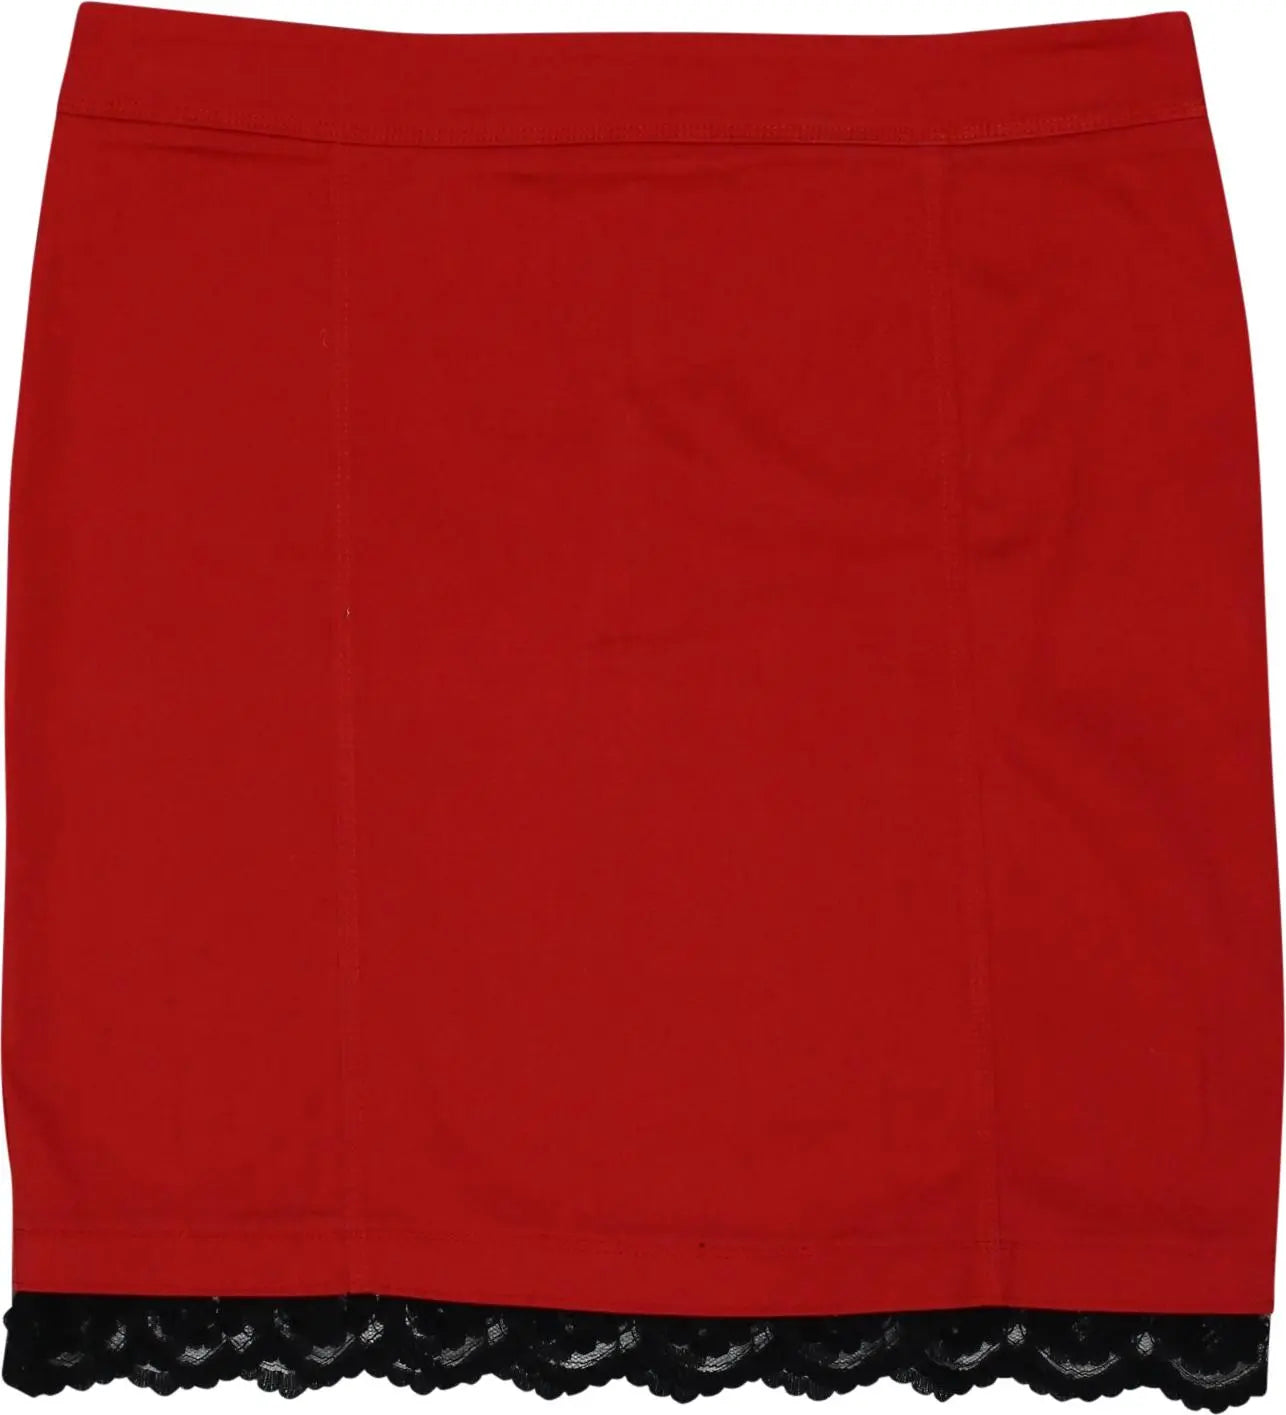 Handmade - Handmade Skirt- ThriftTale.com - Vintage and second handclothing